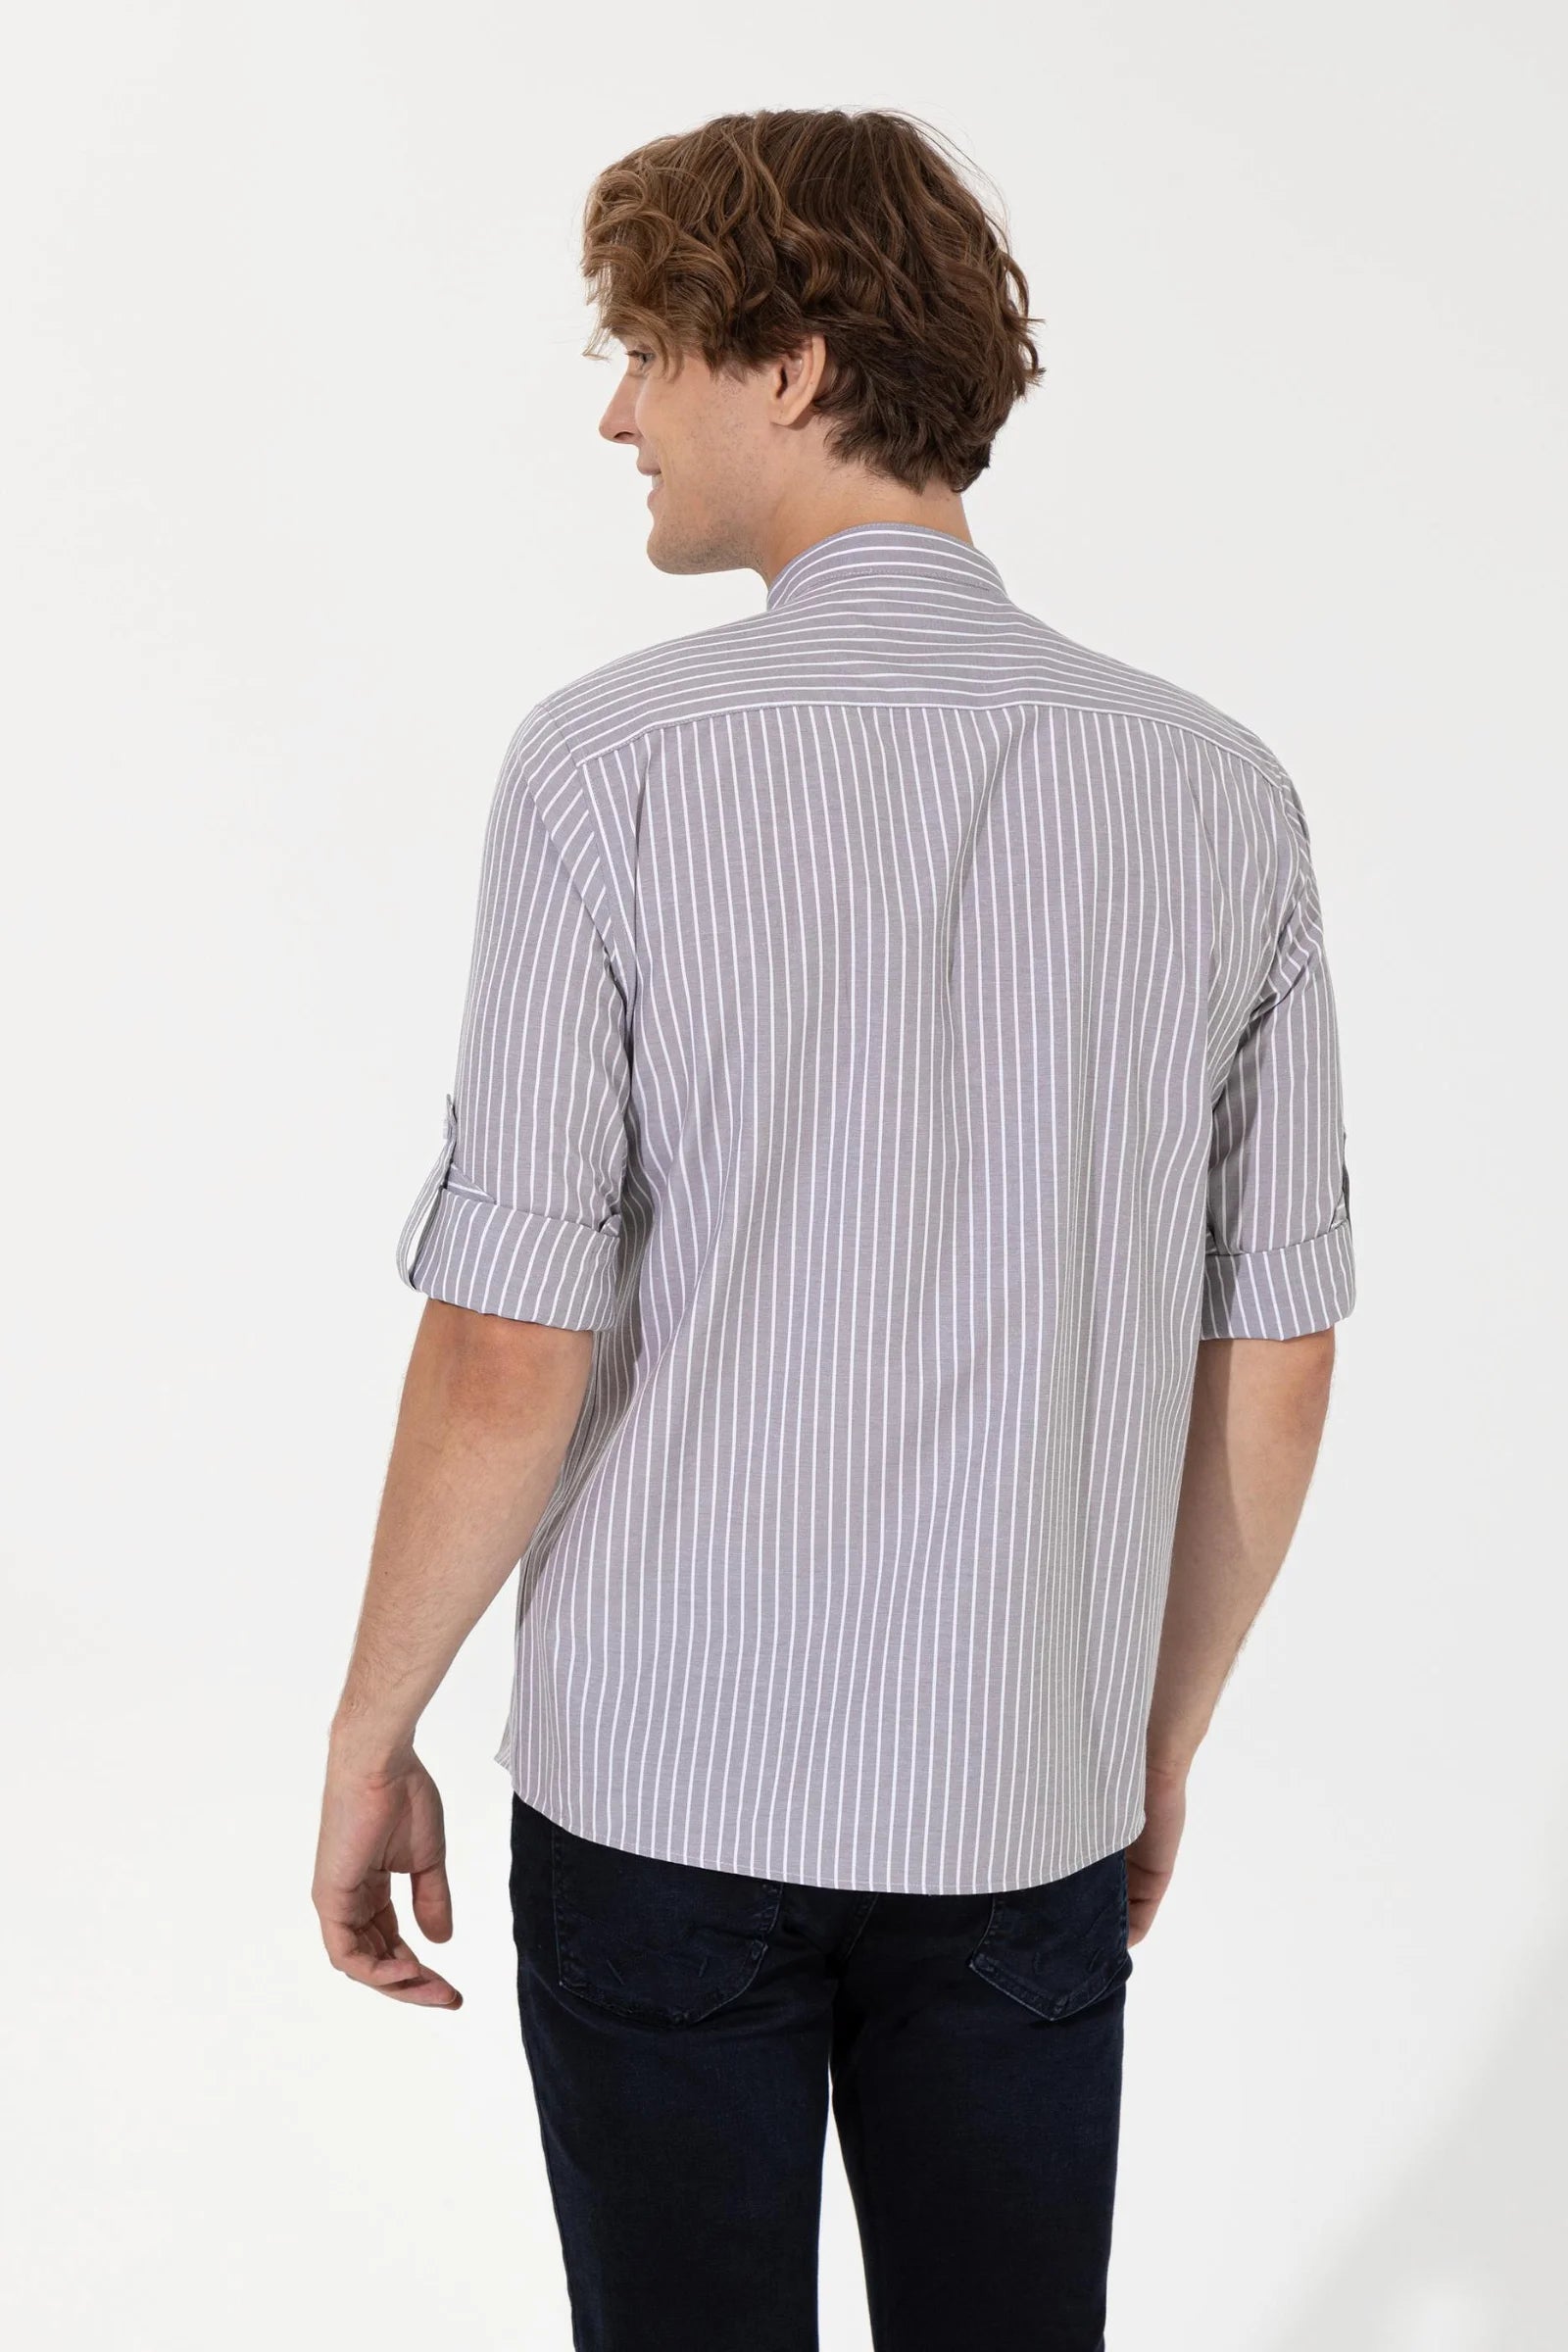 US Polo Assn. Strips Regular Shirt Long Sleeve With A Single Pocket - Men